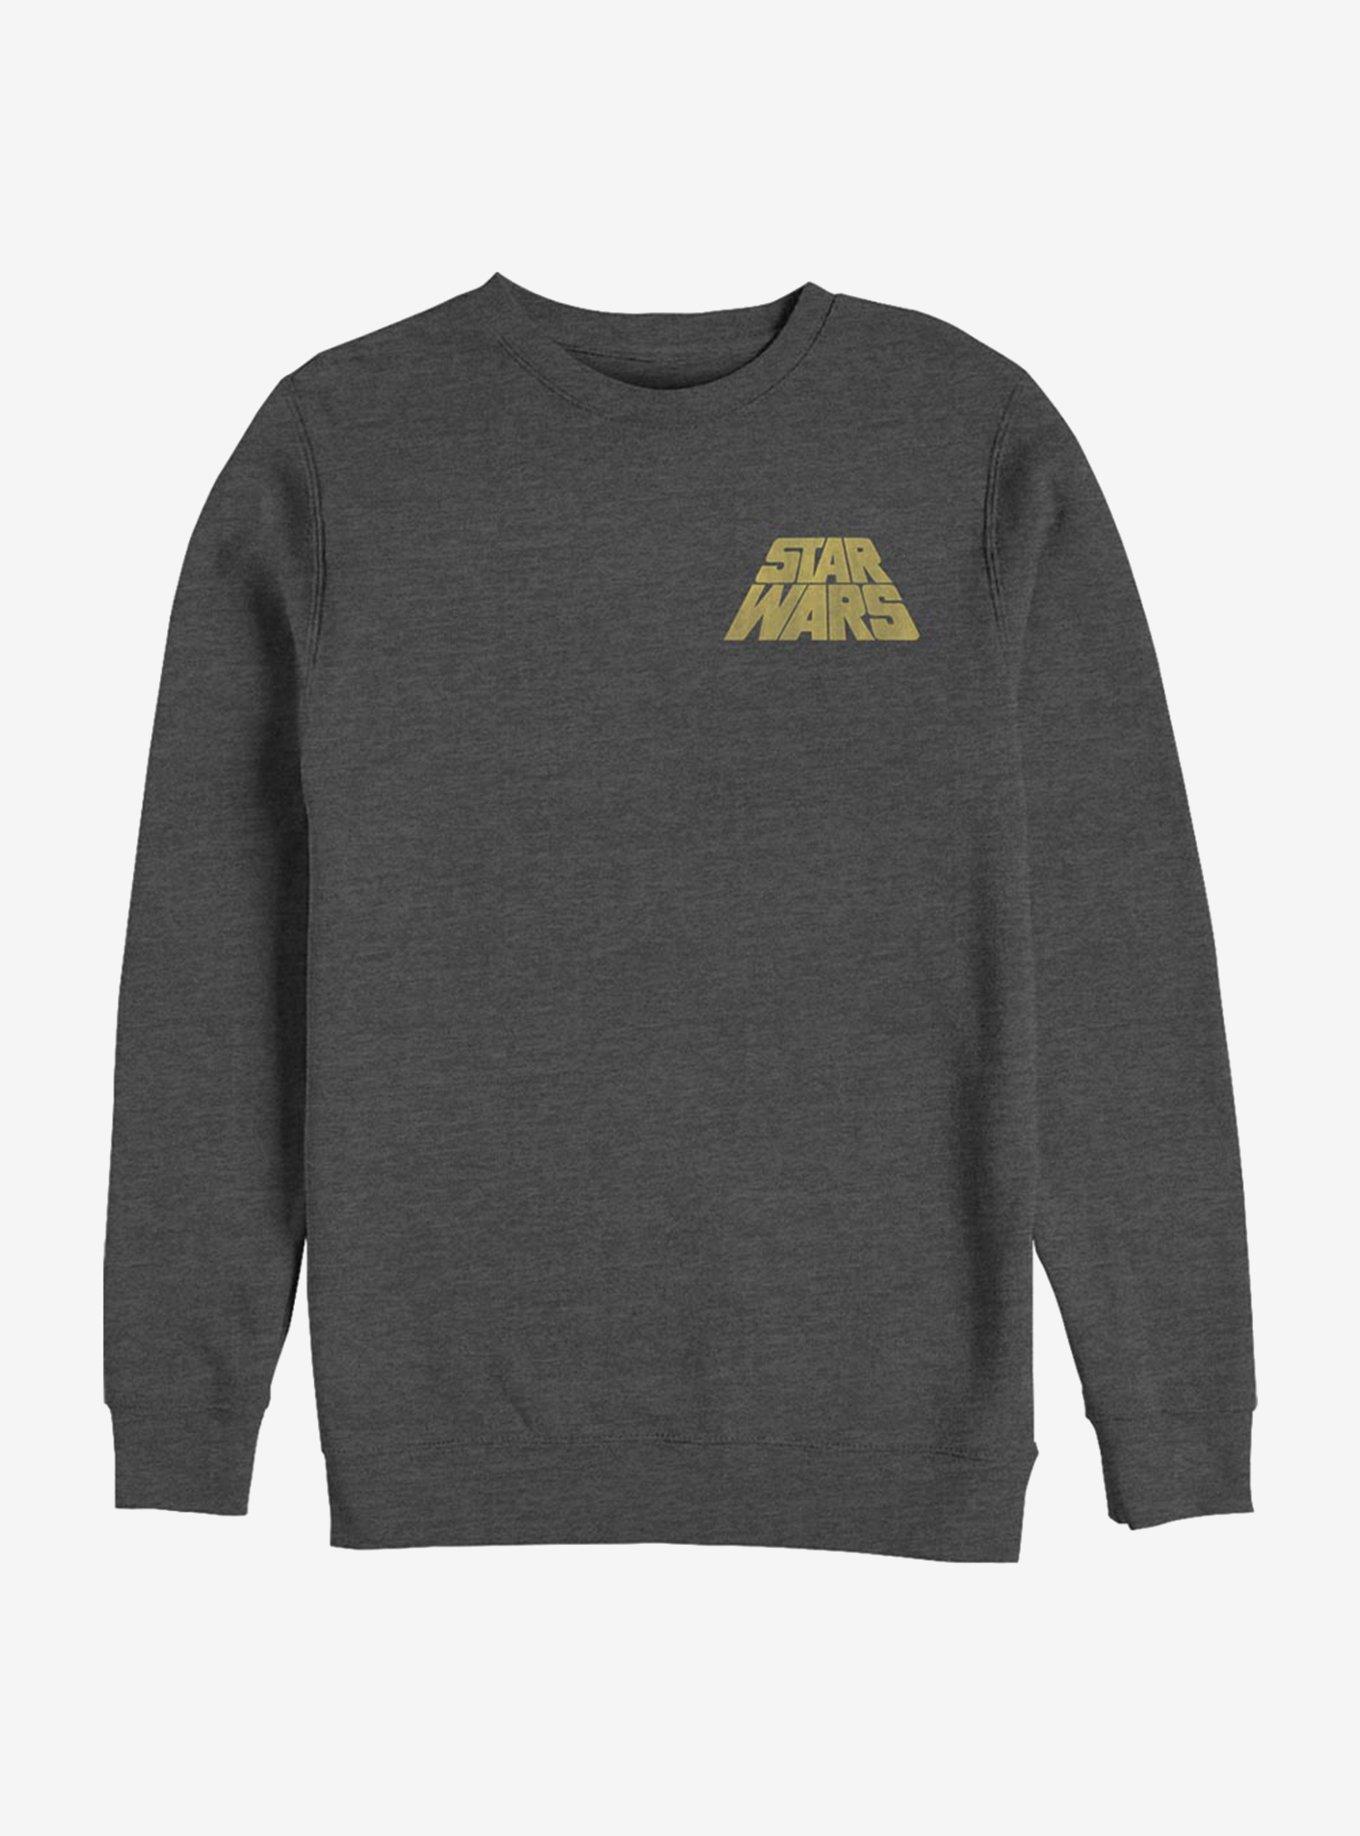 Star Wars Distressed Slant Logo Crew Sweatshirt, CHAR HTR, hi-res